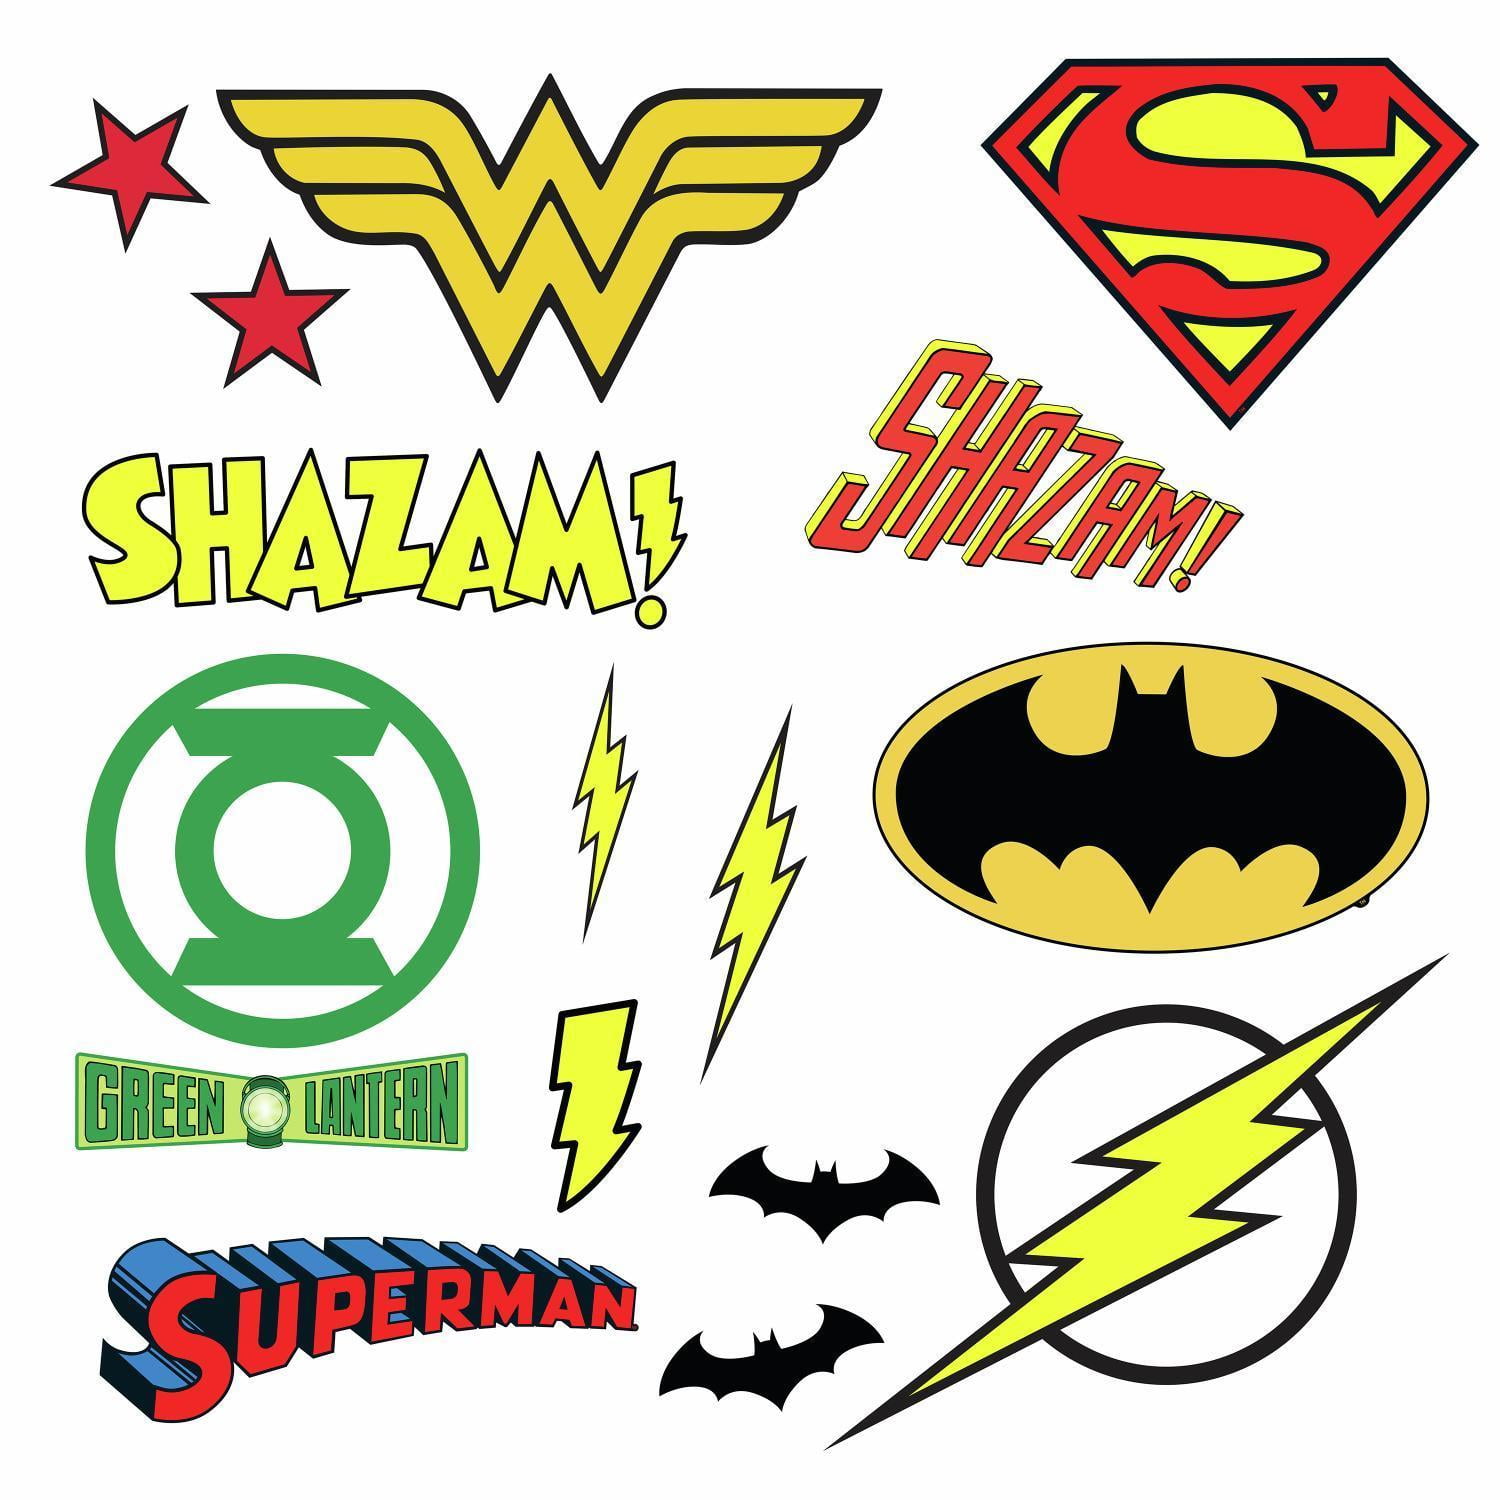 Superheroes logos Marvel Superman Spiderman Batman giant wall stickers kit decal 